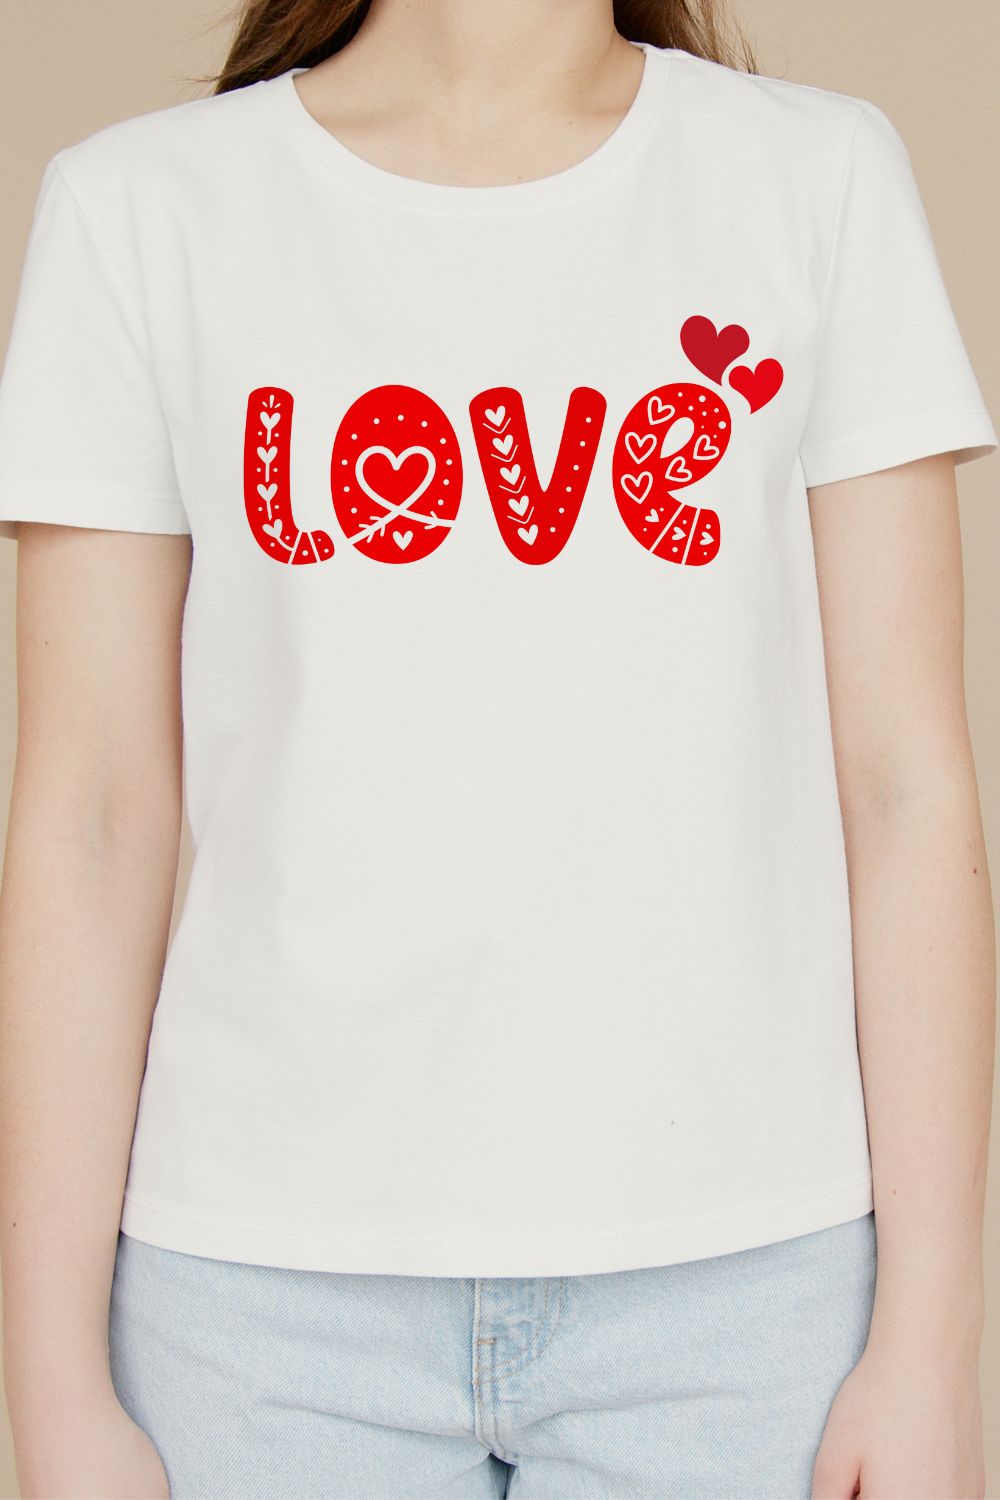 Love T-shirt Design pinterest preview image.